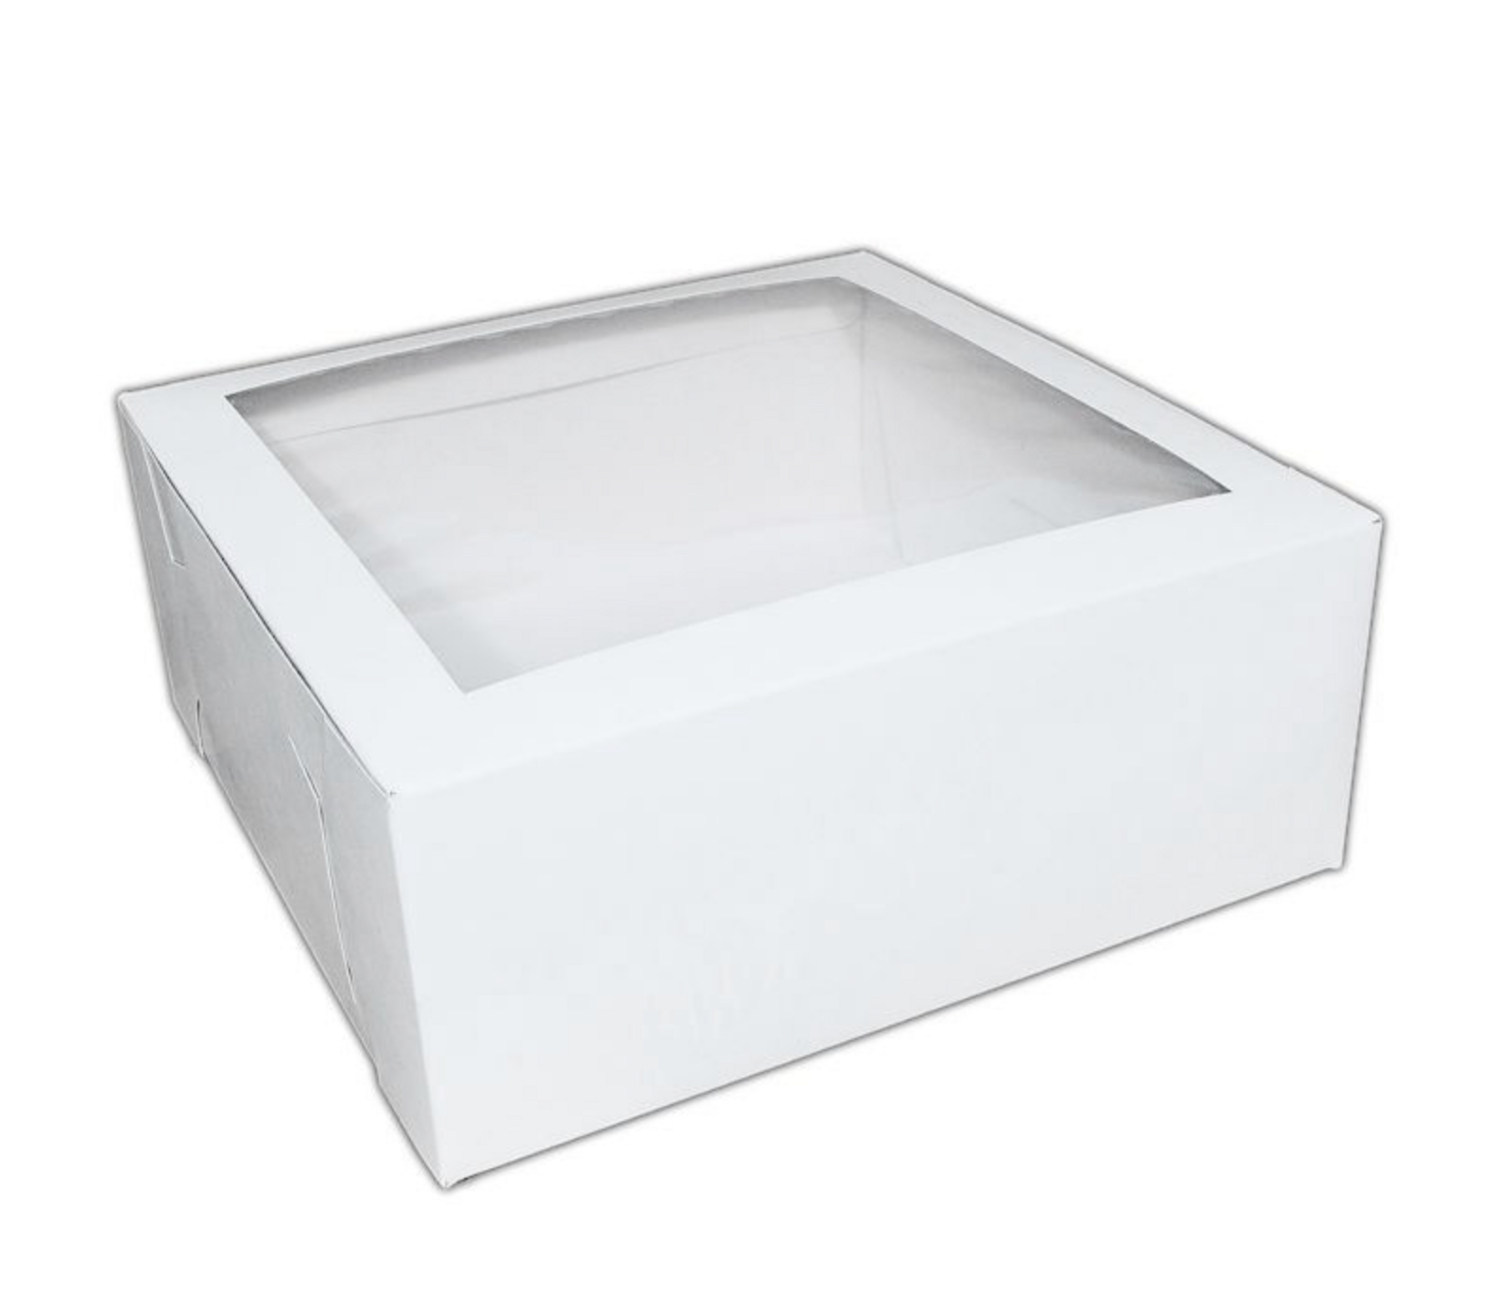 Cake Box With Window - Χαμηλό Κουτί με παράθυρο 25εκ ΜΟΝΟ ΓΙΑ ΠΑΡΑΛΑΒΗ ΑΠΟ ΤΟ CAKES BY SAMANTHA